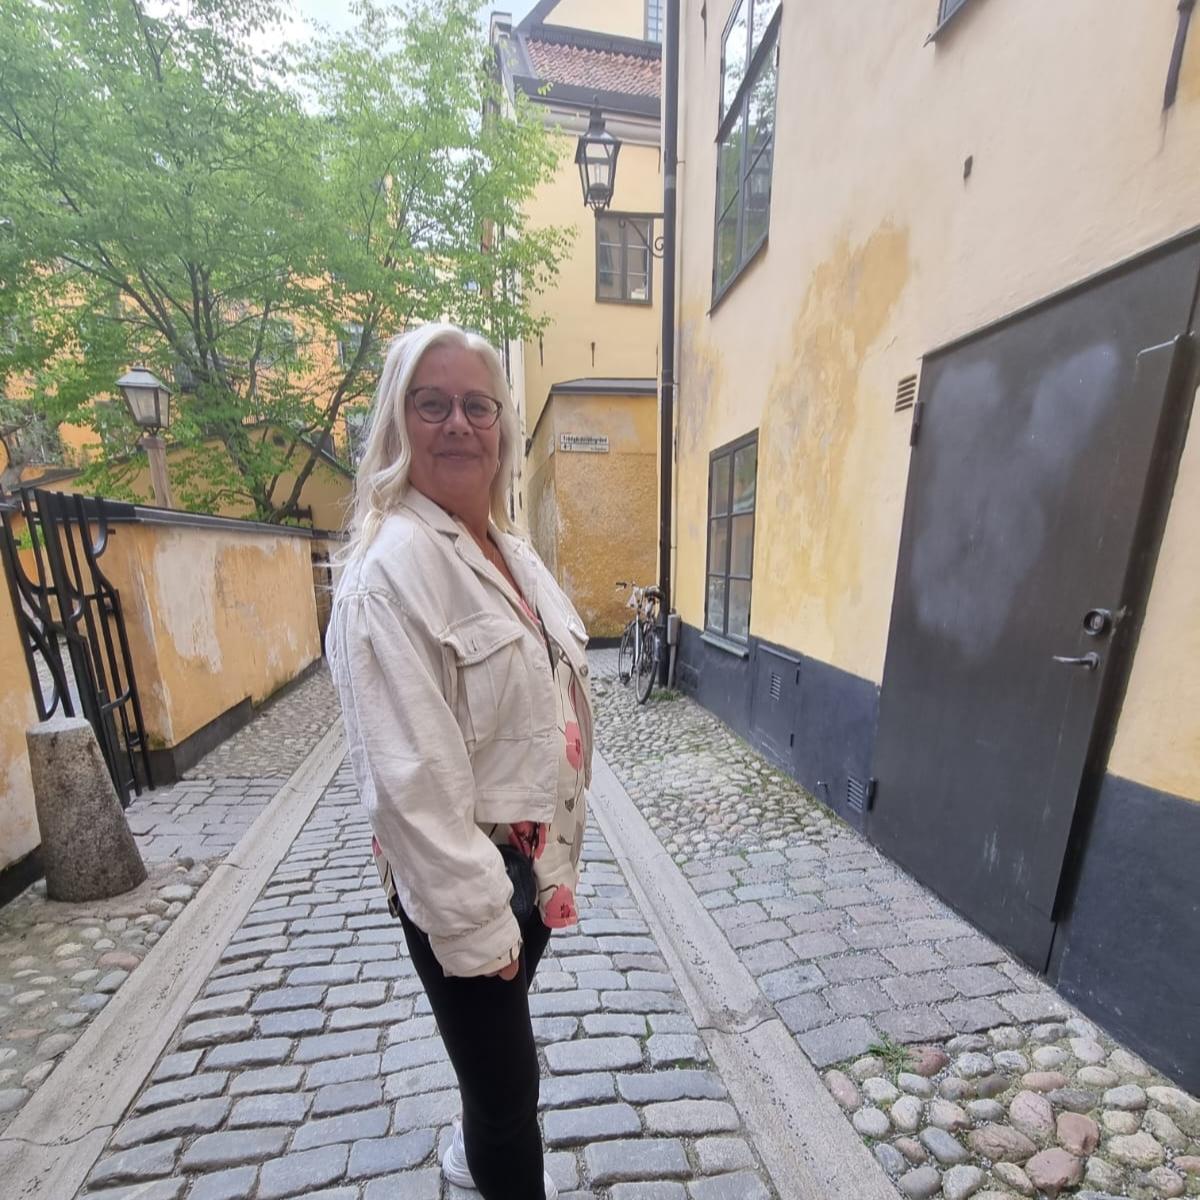 Eva in Sweden's images